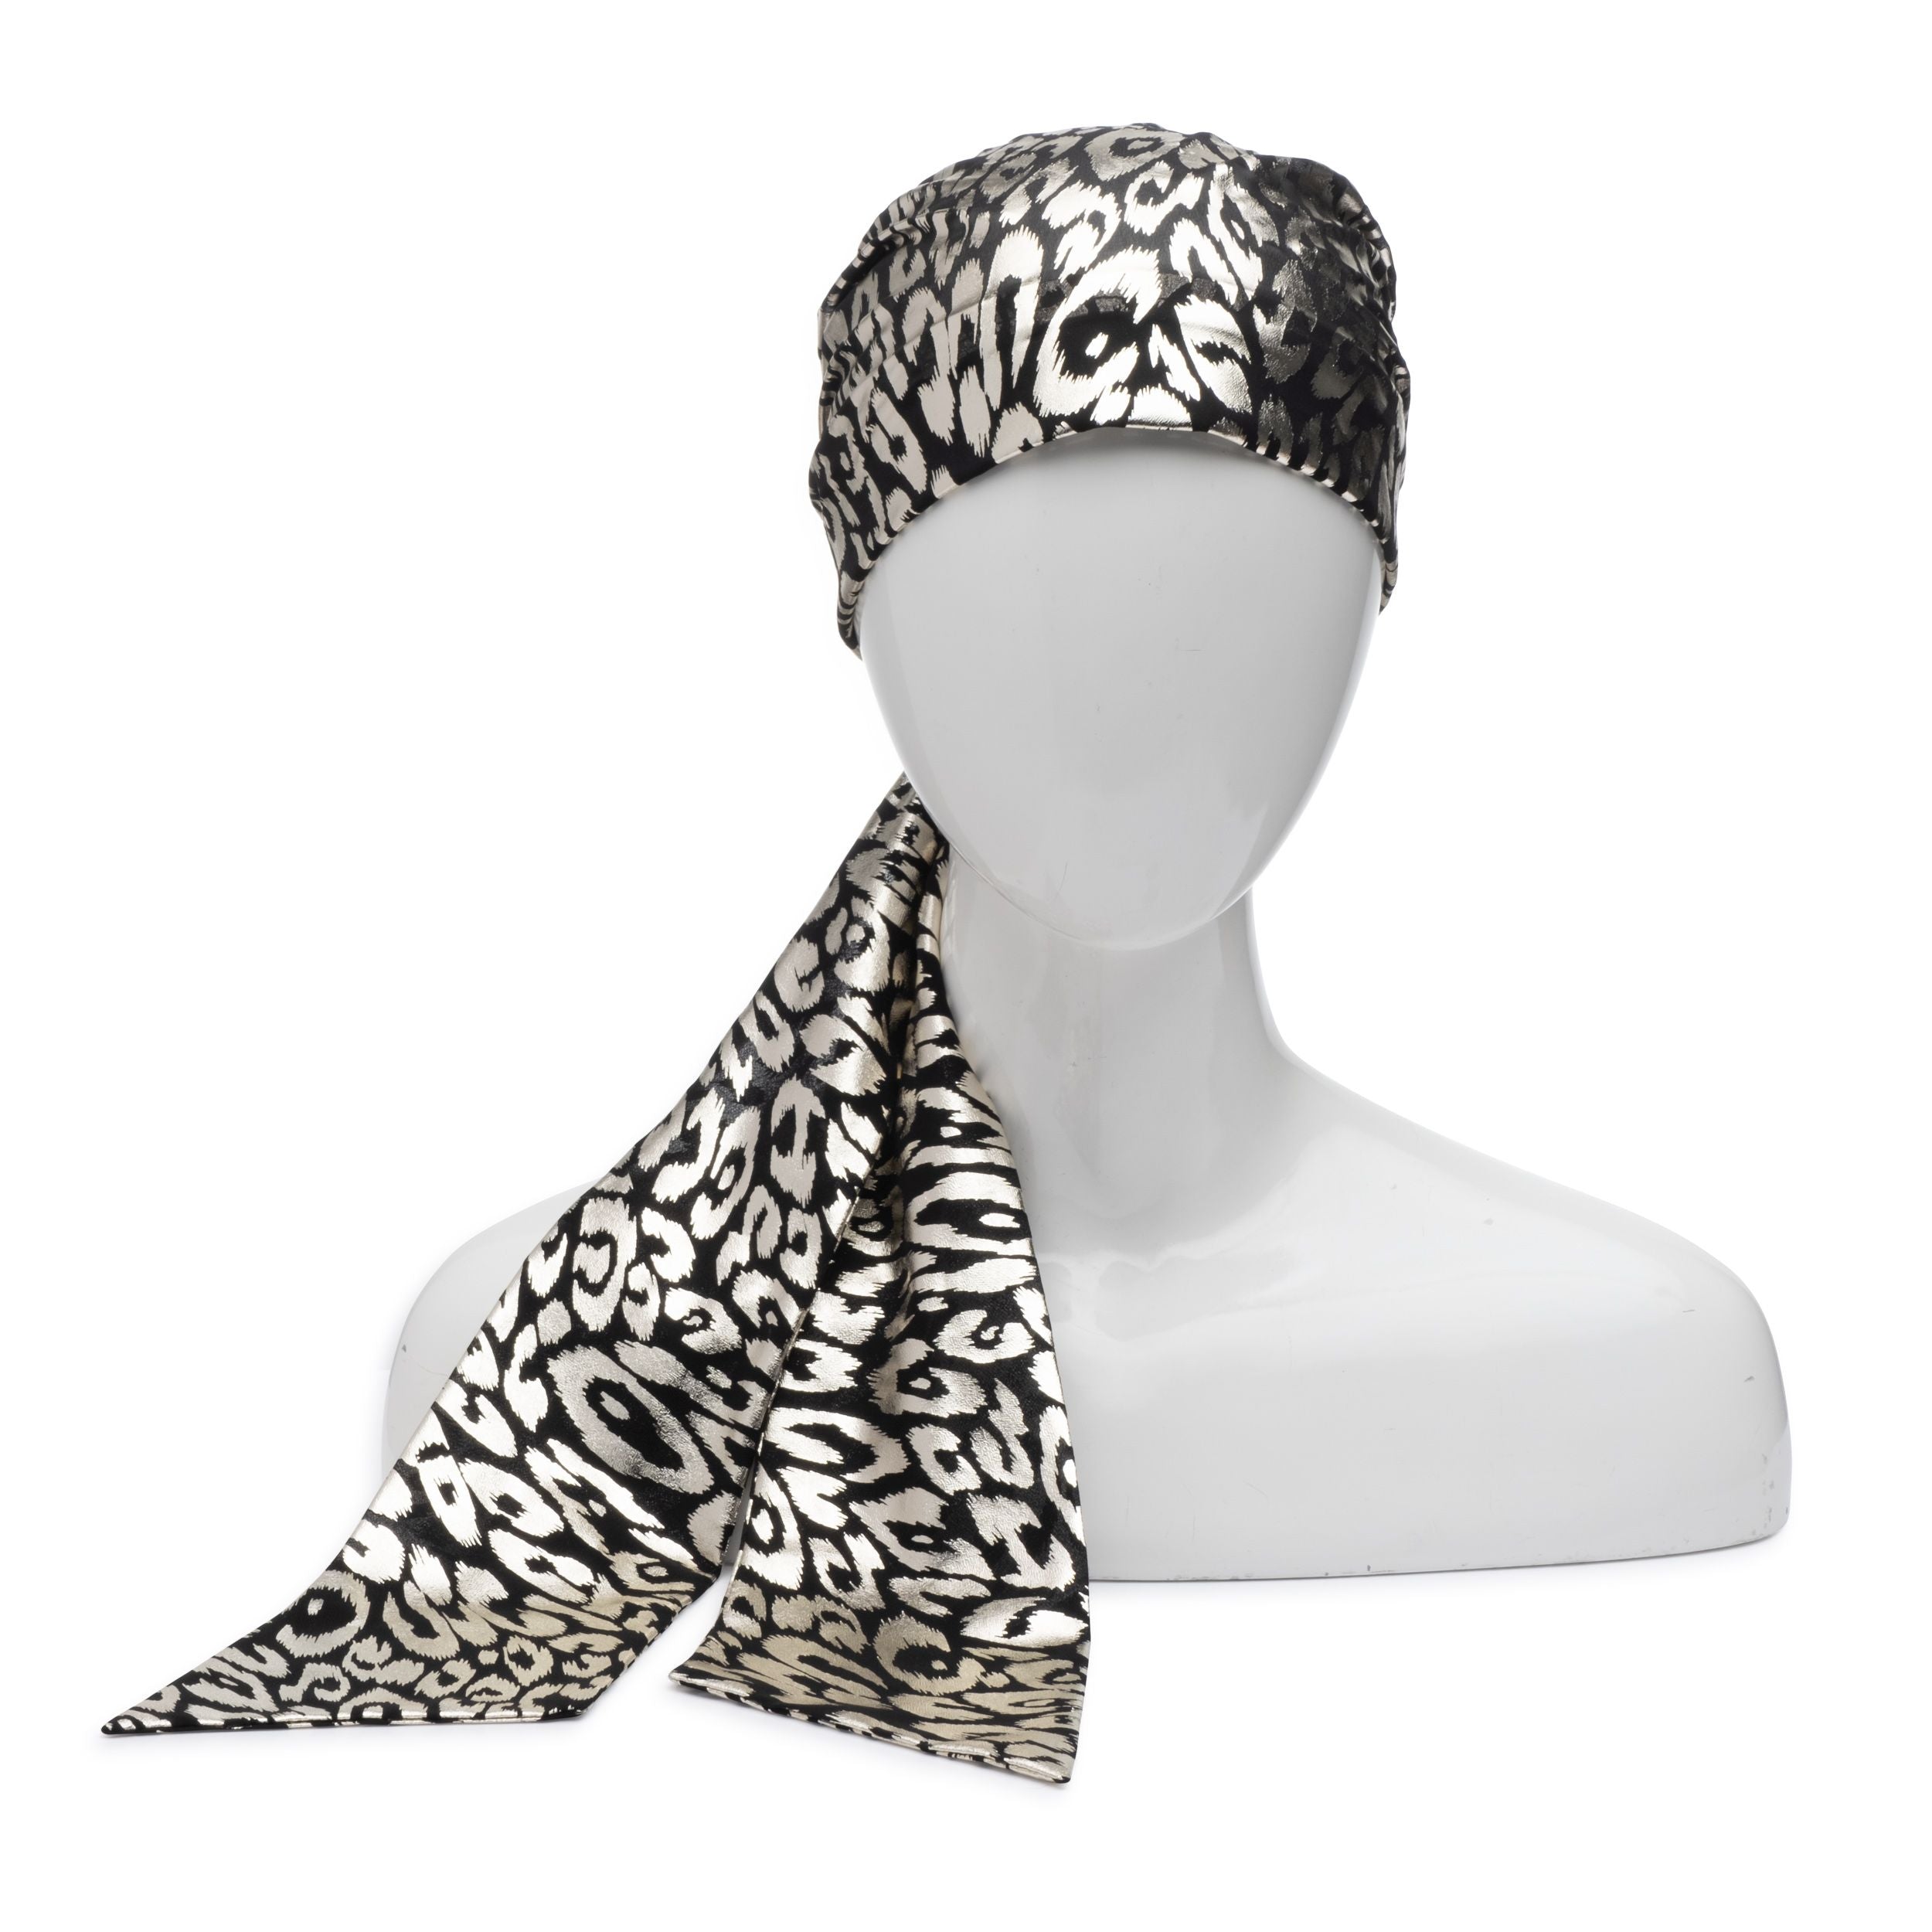 Eugenia Kim Gigi headscarf in gold/black leopard product shot